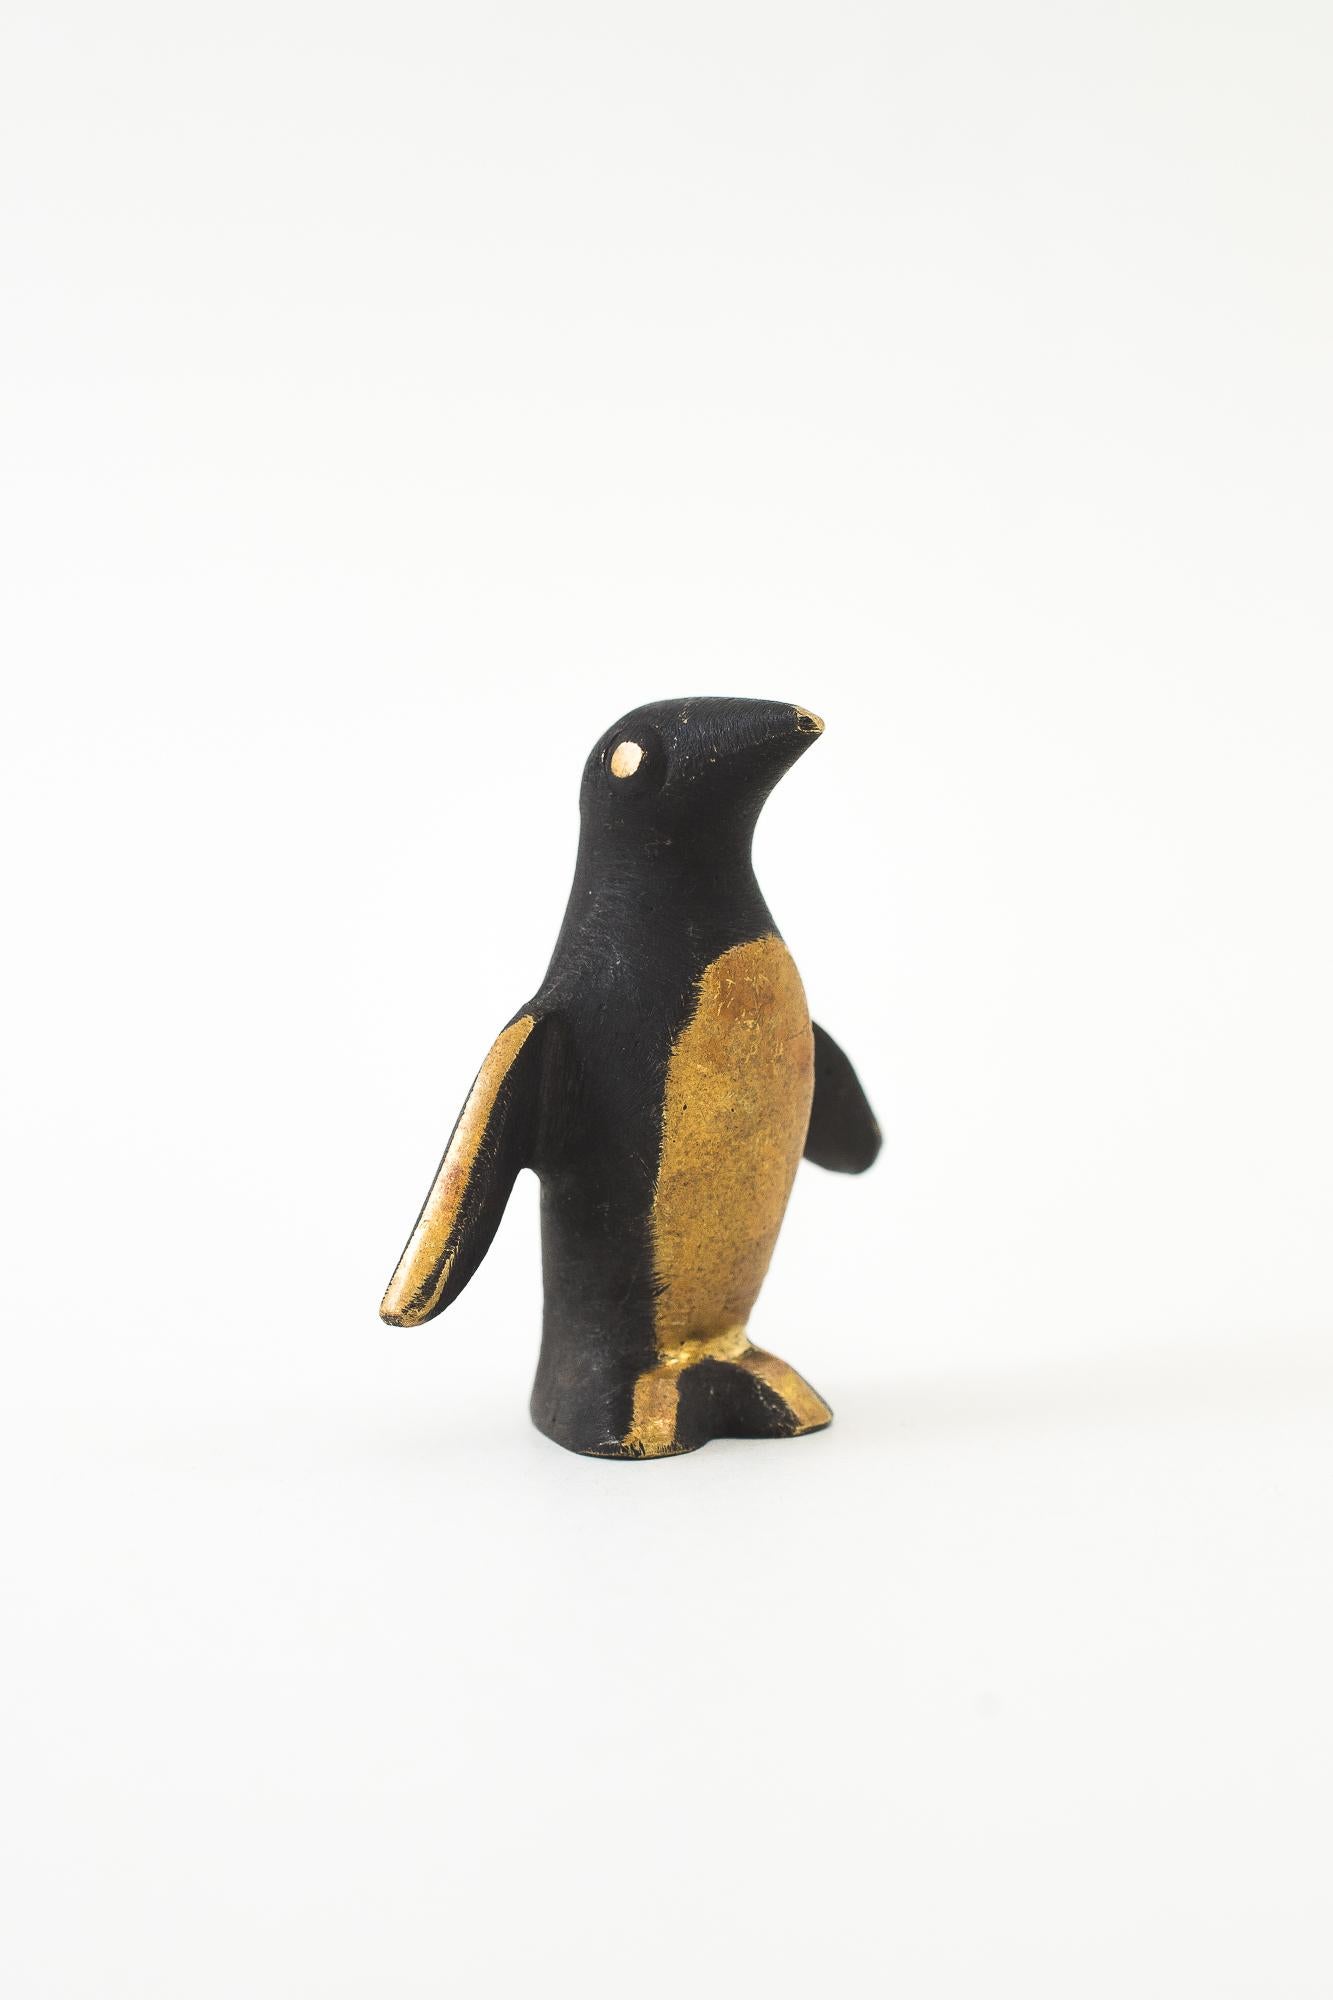 Figurine pingouin Walter Bosse vienne vers 1950 ( Marqué )
État original.